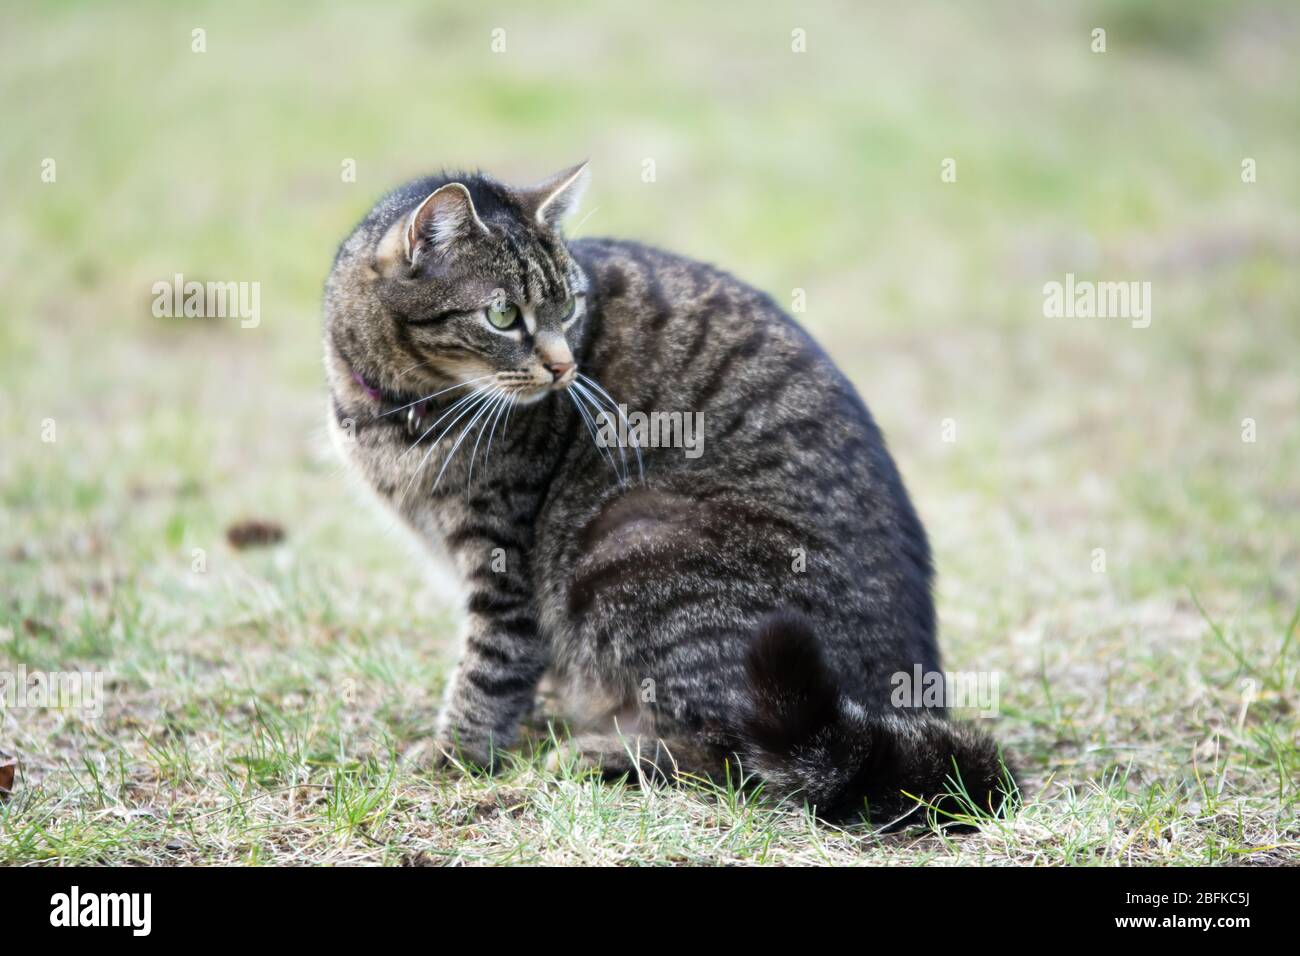 https://c8.alamy.com/comp/2BFKC5J/striped-grey-tabby-cat-sitting-on-the-grass-looking-back-watchful-2BFKC5J.jpg